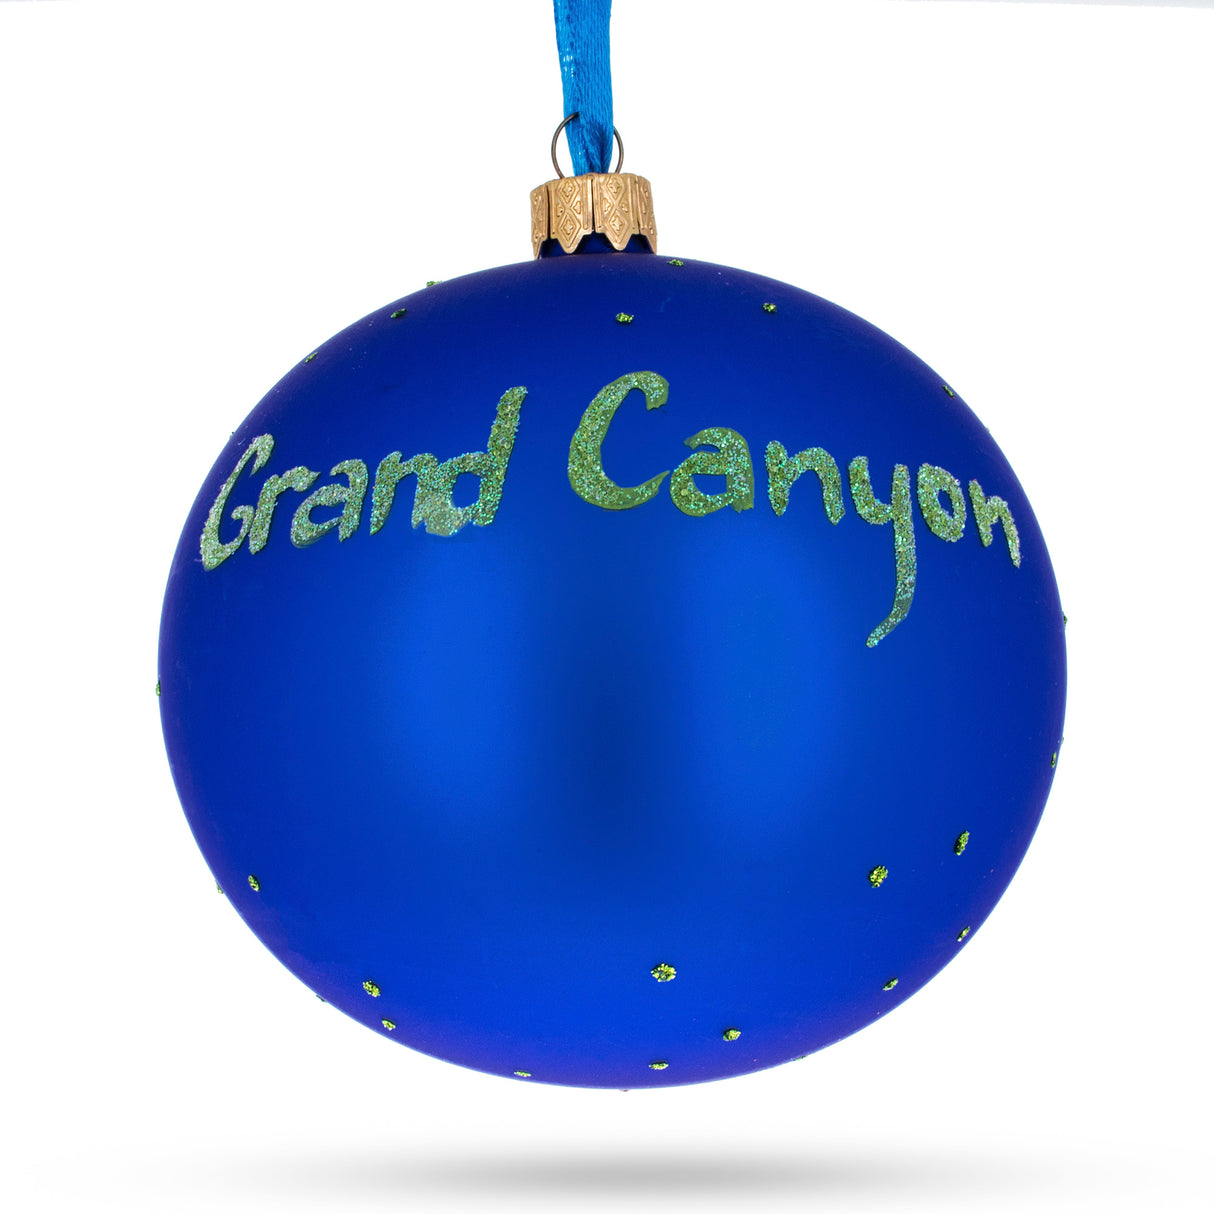 Buy Christmas Ornaments > Travel > North America > USA > Arizona > Wonders of the World by BestPysanky Online Gift Ship